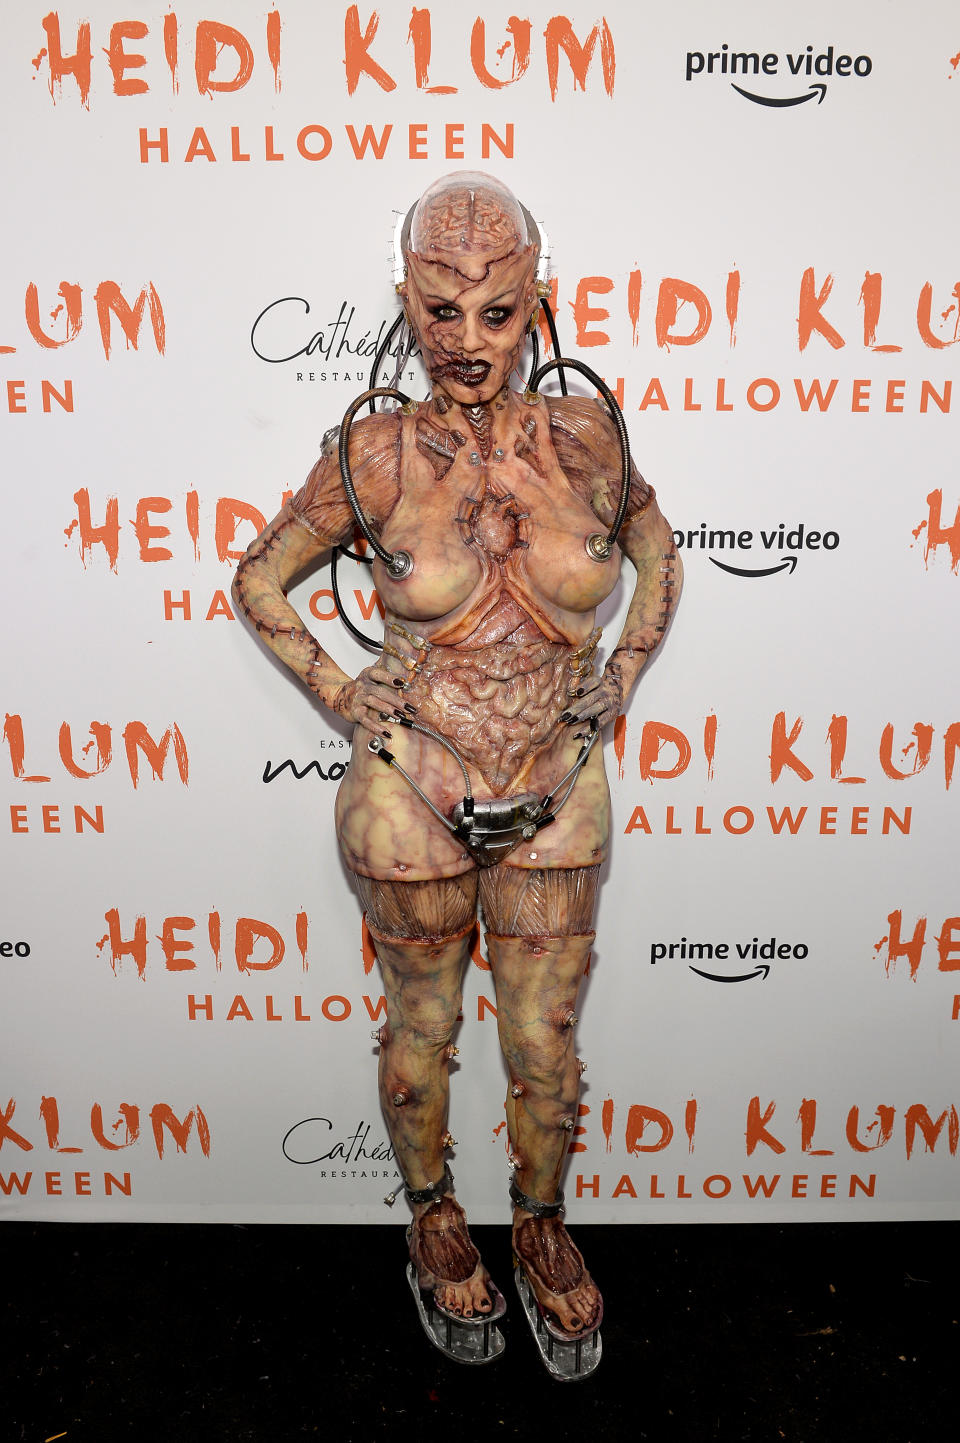 NEW YORK, NEW YORK - OCTOBER 31: Heidi Klum attends Heidi Klum's 20th Annual Halloween Party presented by Amazon Prime Video and SVEDKA Vodka at Cathédrale New York on October 31, 2019 in New York City. (Photo by Noam Galai/Getty Images for Heidi Klum)